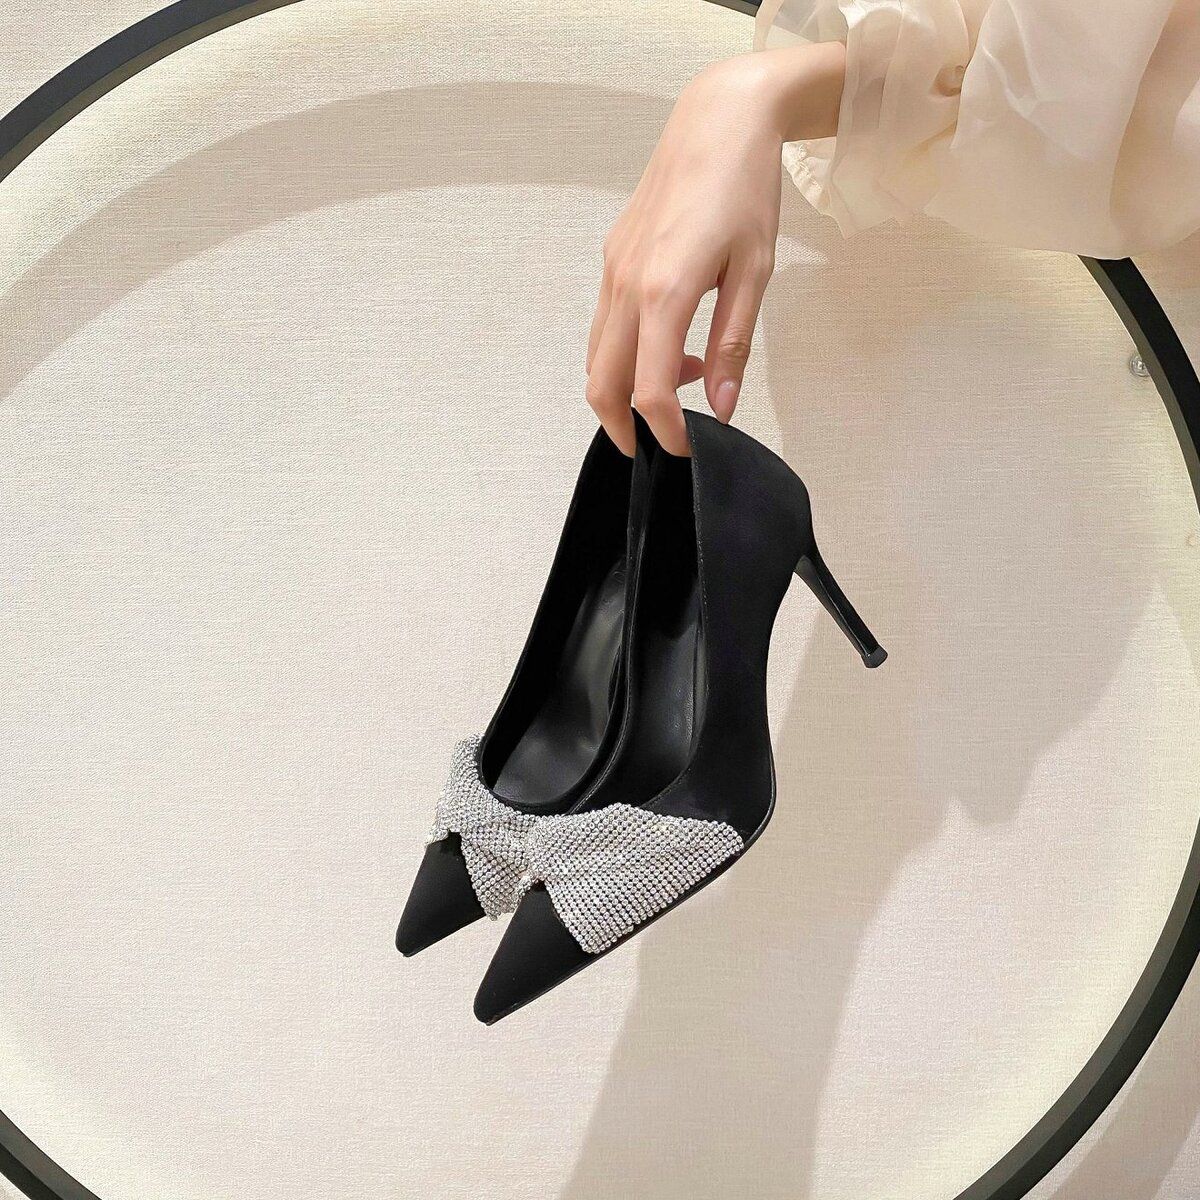 Fashionable professional women's trendy versatile rhinestone bow shoes  new black temperament pointed toe high heels